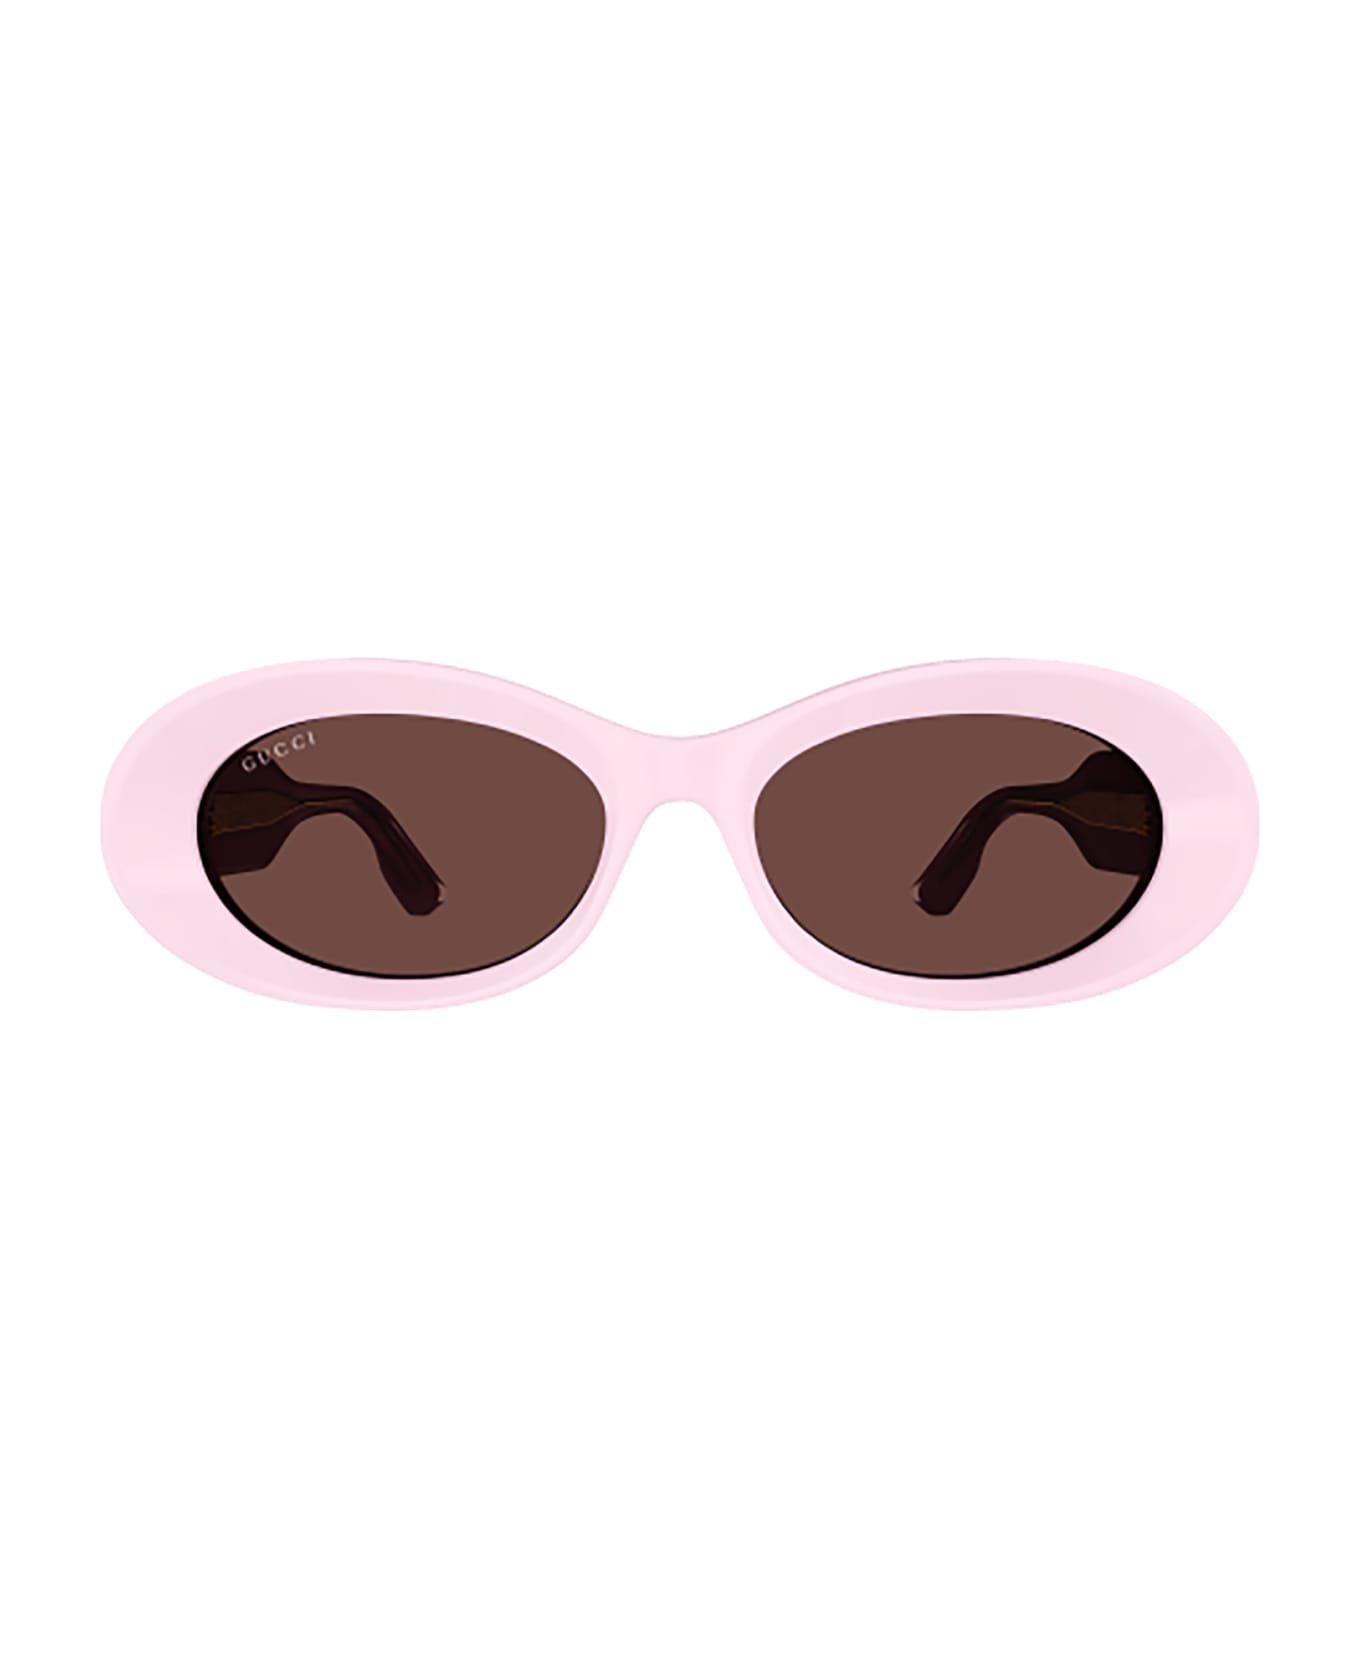 Gucci Eyewear GG1527S Sunglasses - Pink Pink Brown